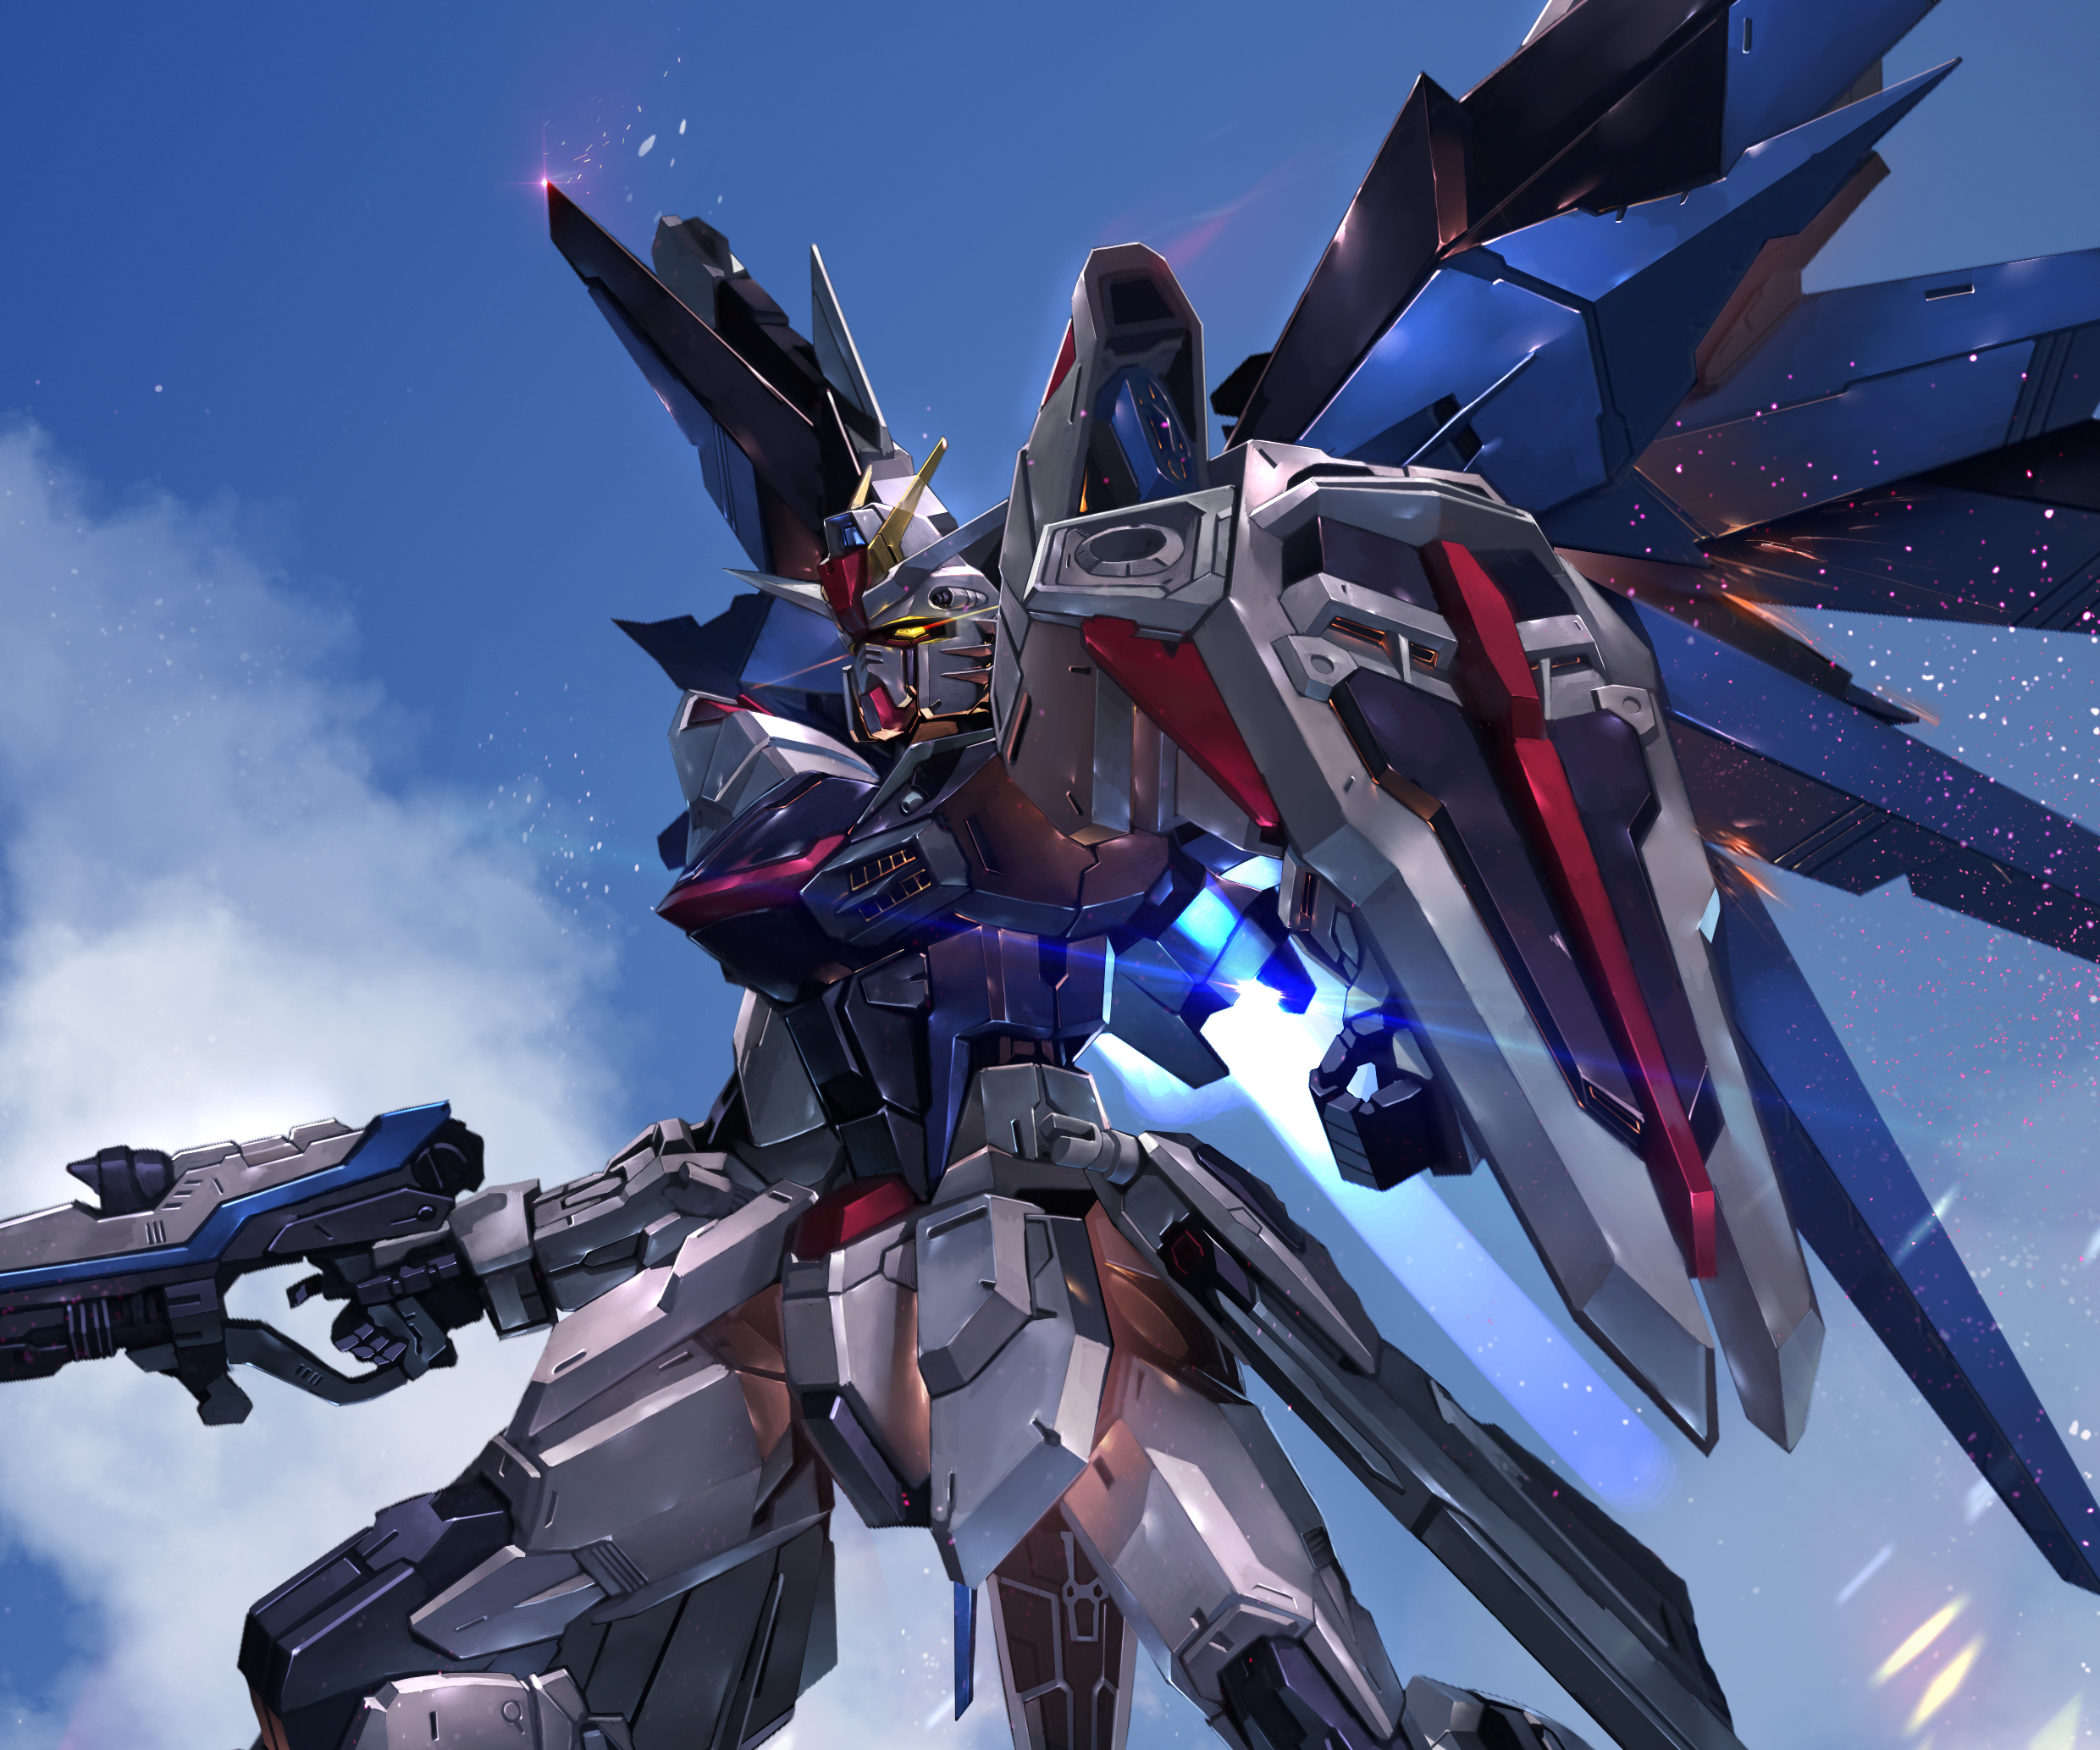 ZGMF-X10A Freedom Gundam by MF Draws